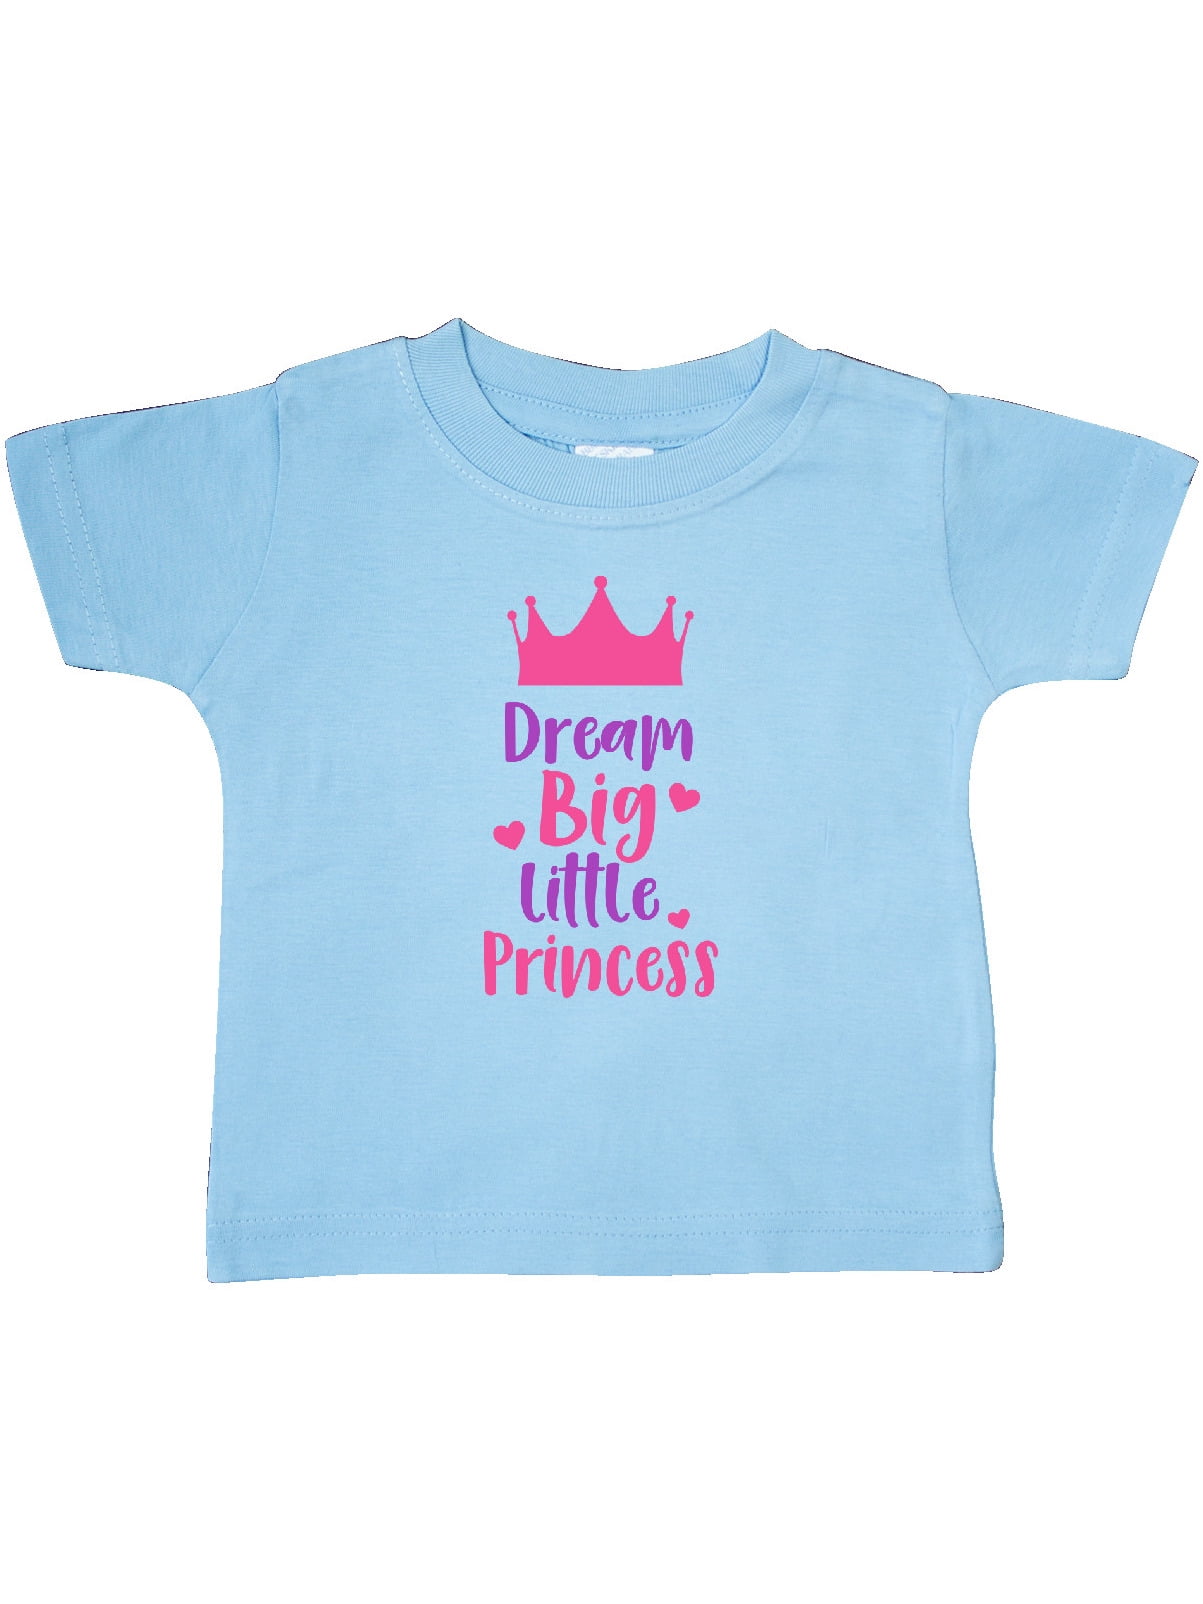 Crown Pink Purple Toddler T-Shirt inktastic Dream Big Little Princess 